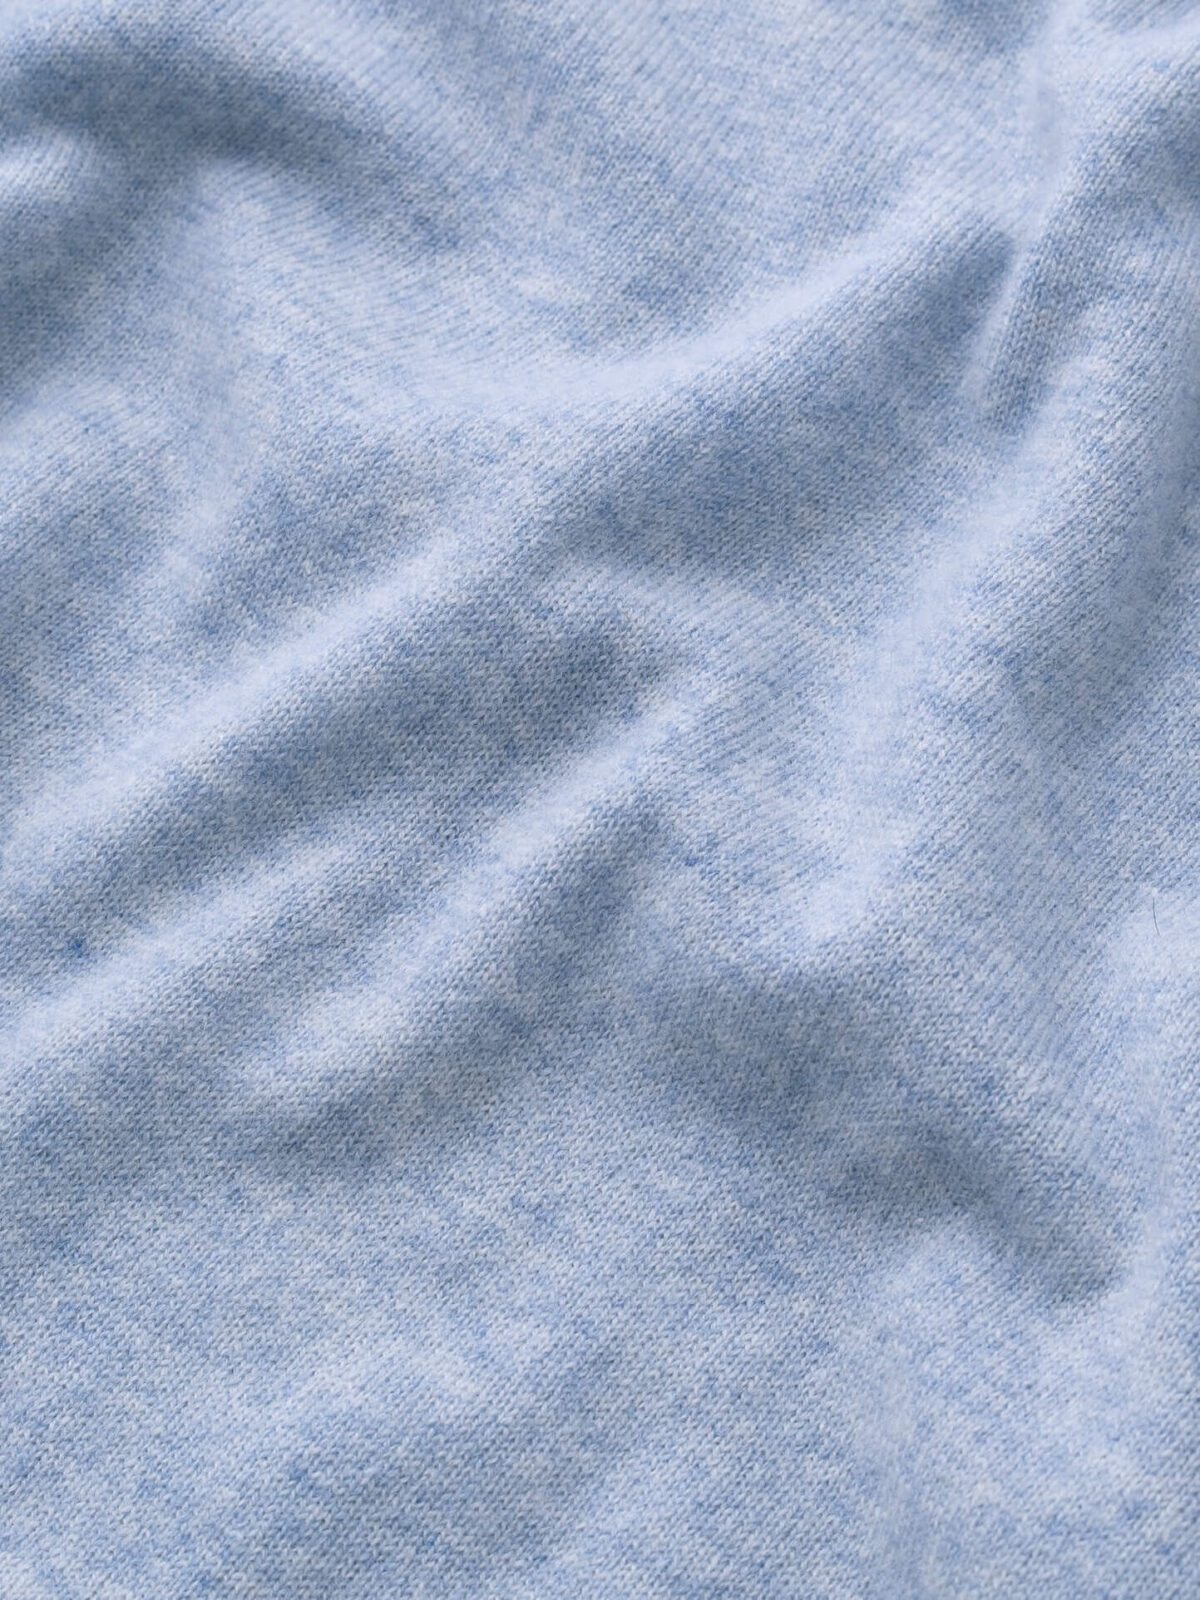 Light Blue Cashmere V-Neck Sweater